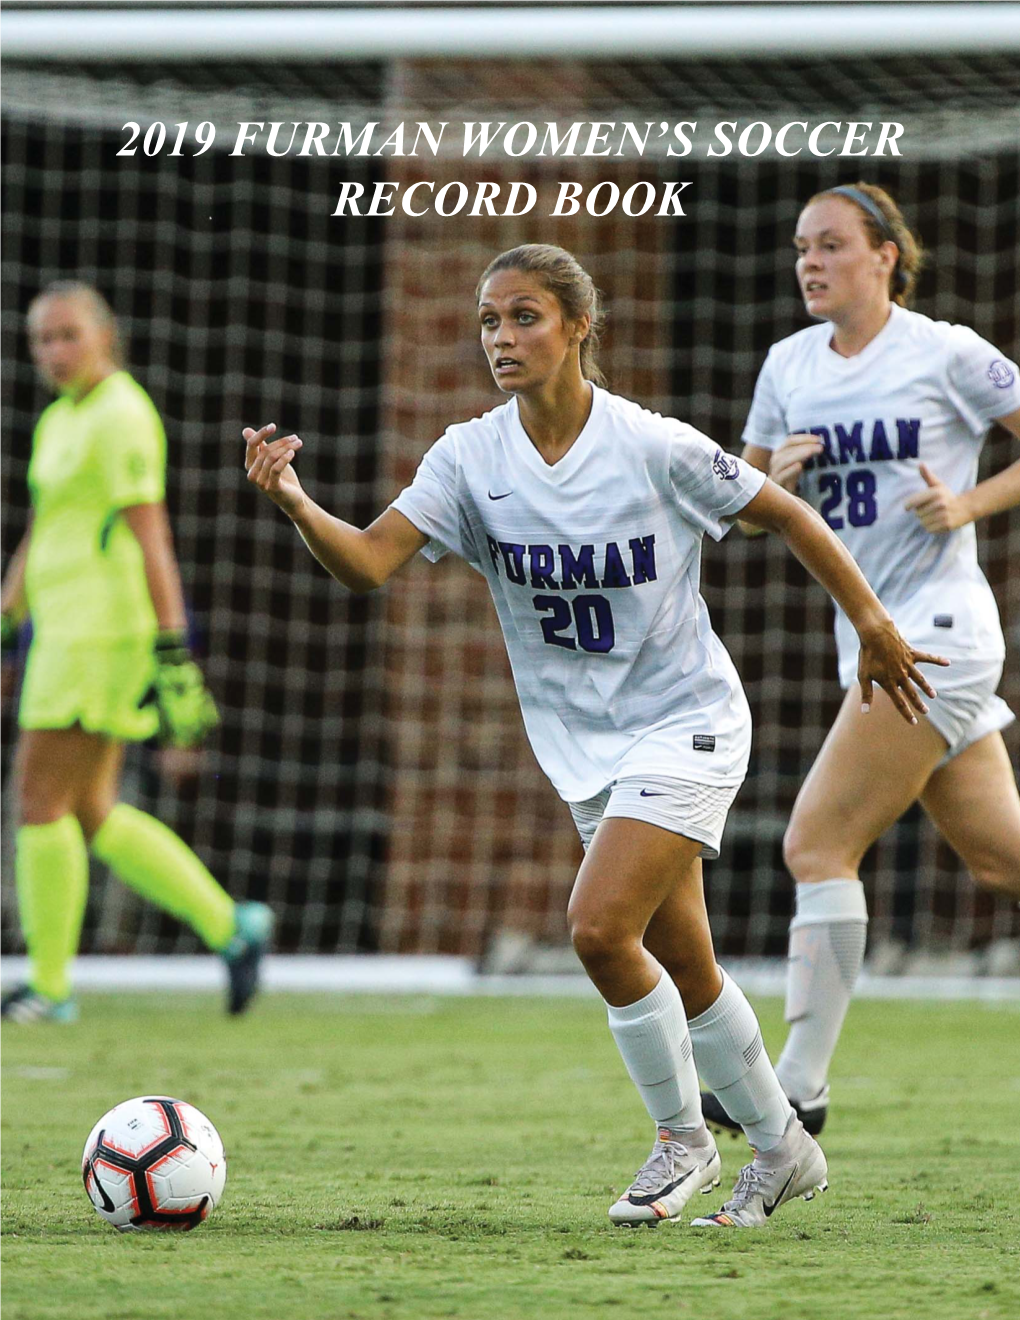 2019 Furman Women's Soccer Record Book